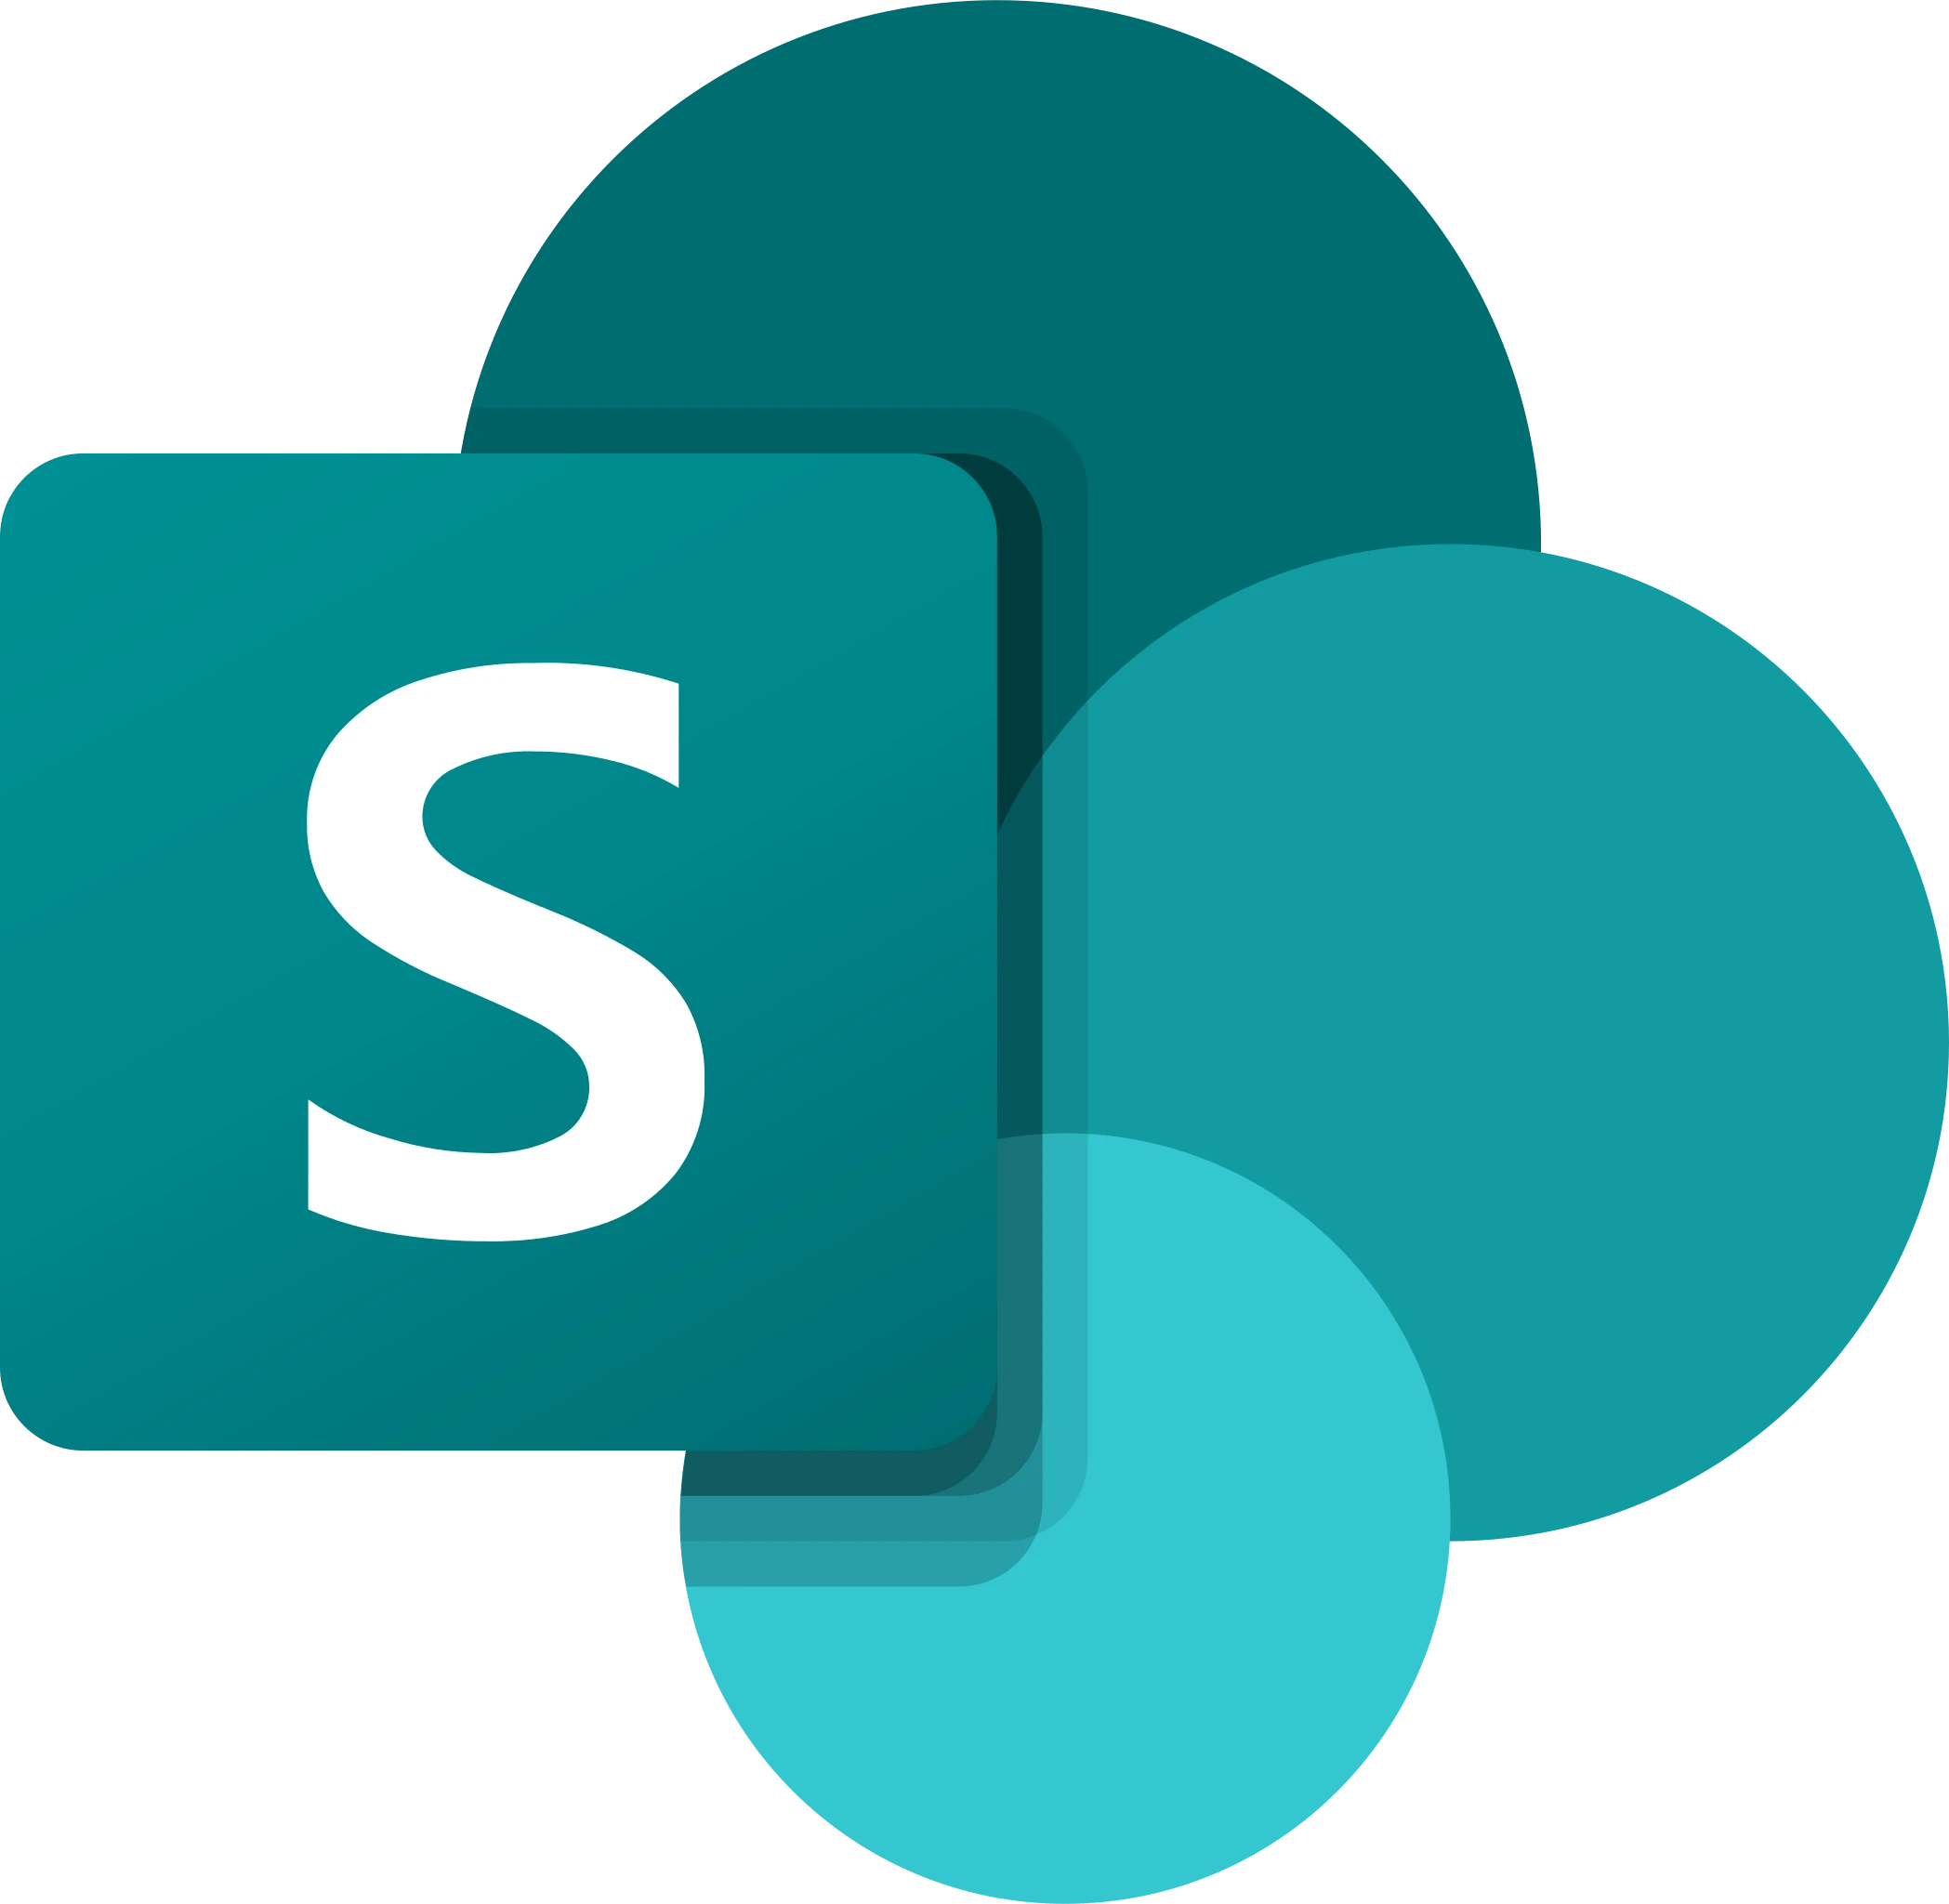 Microsoft_Office_SharePoint_(2019–present).svg